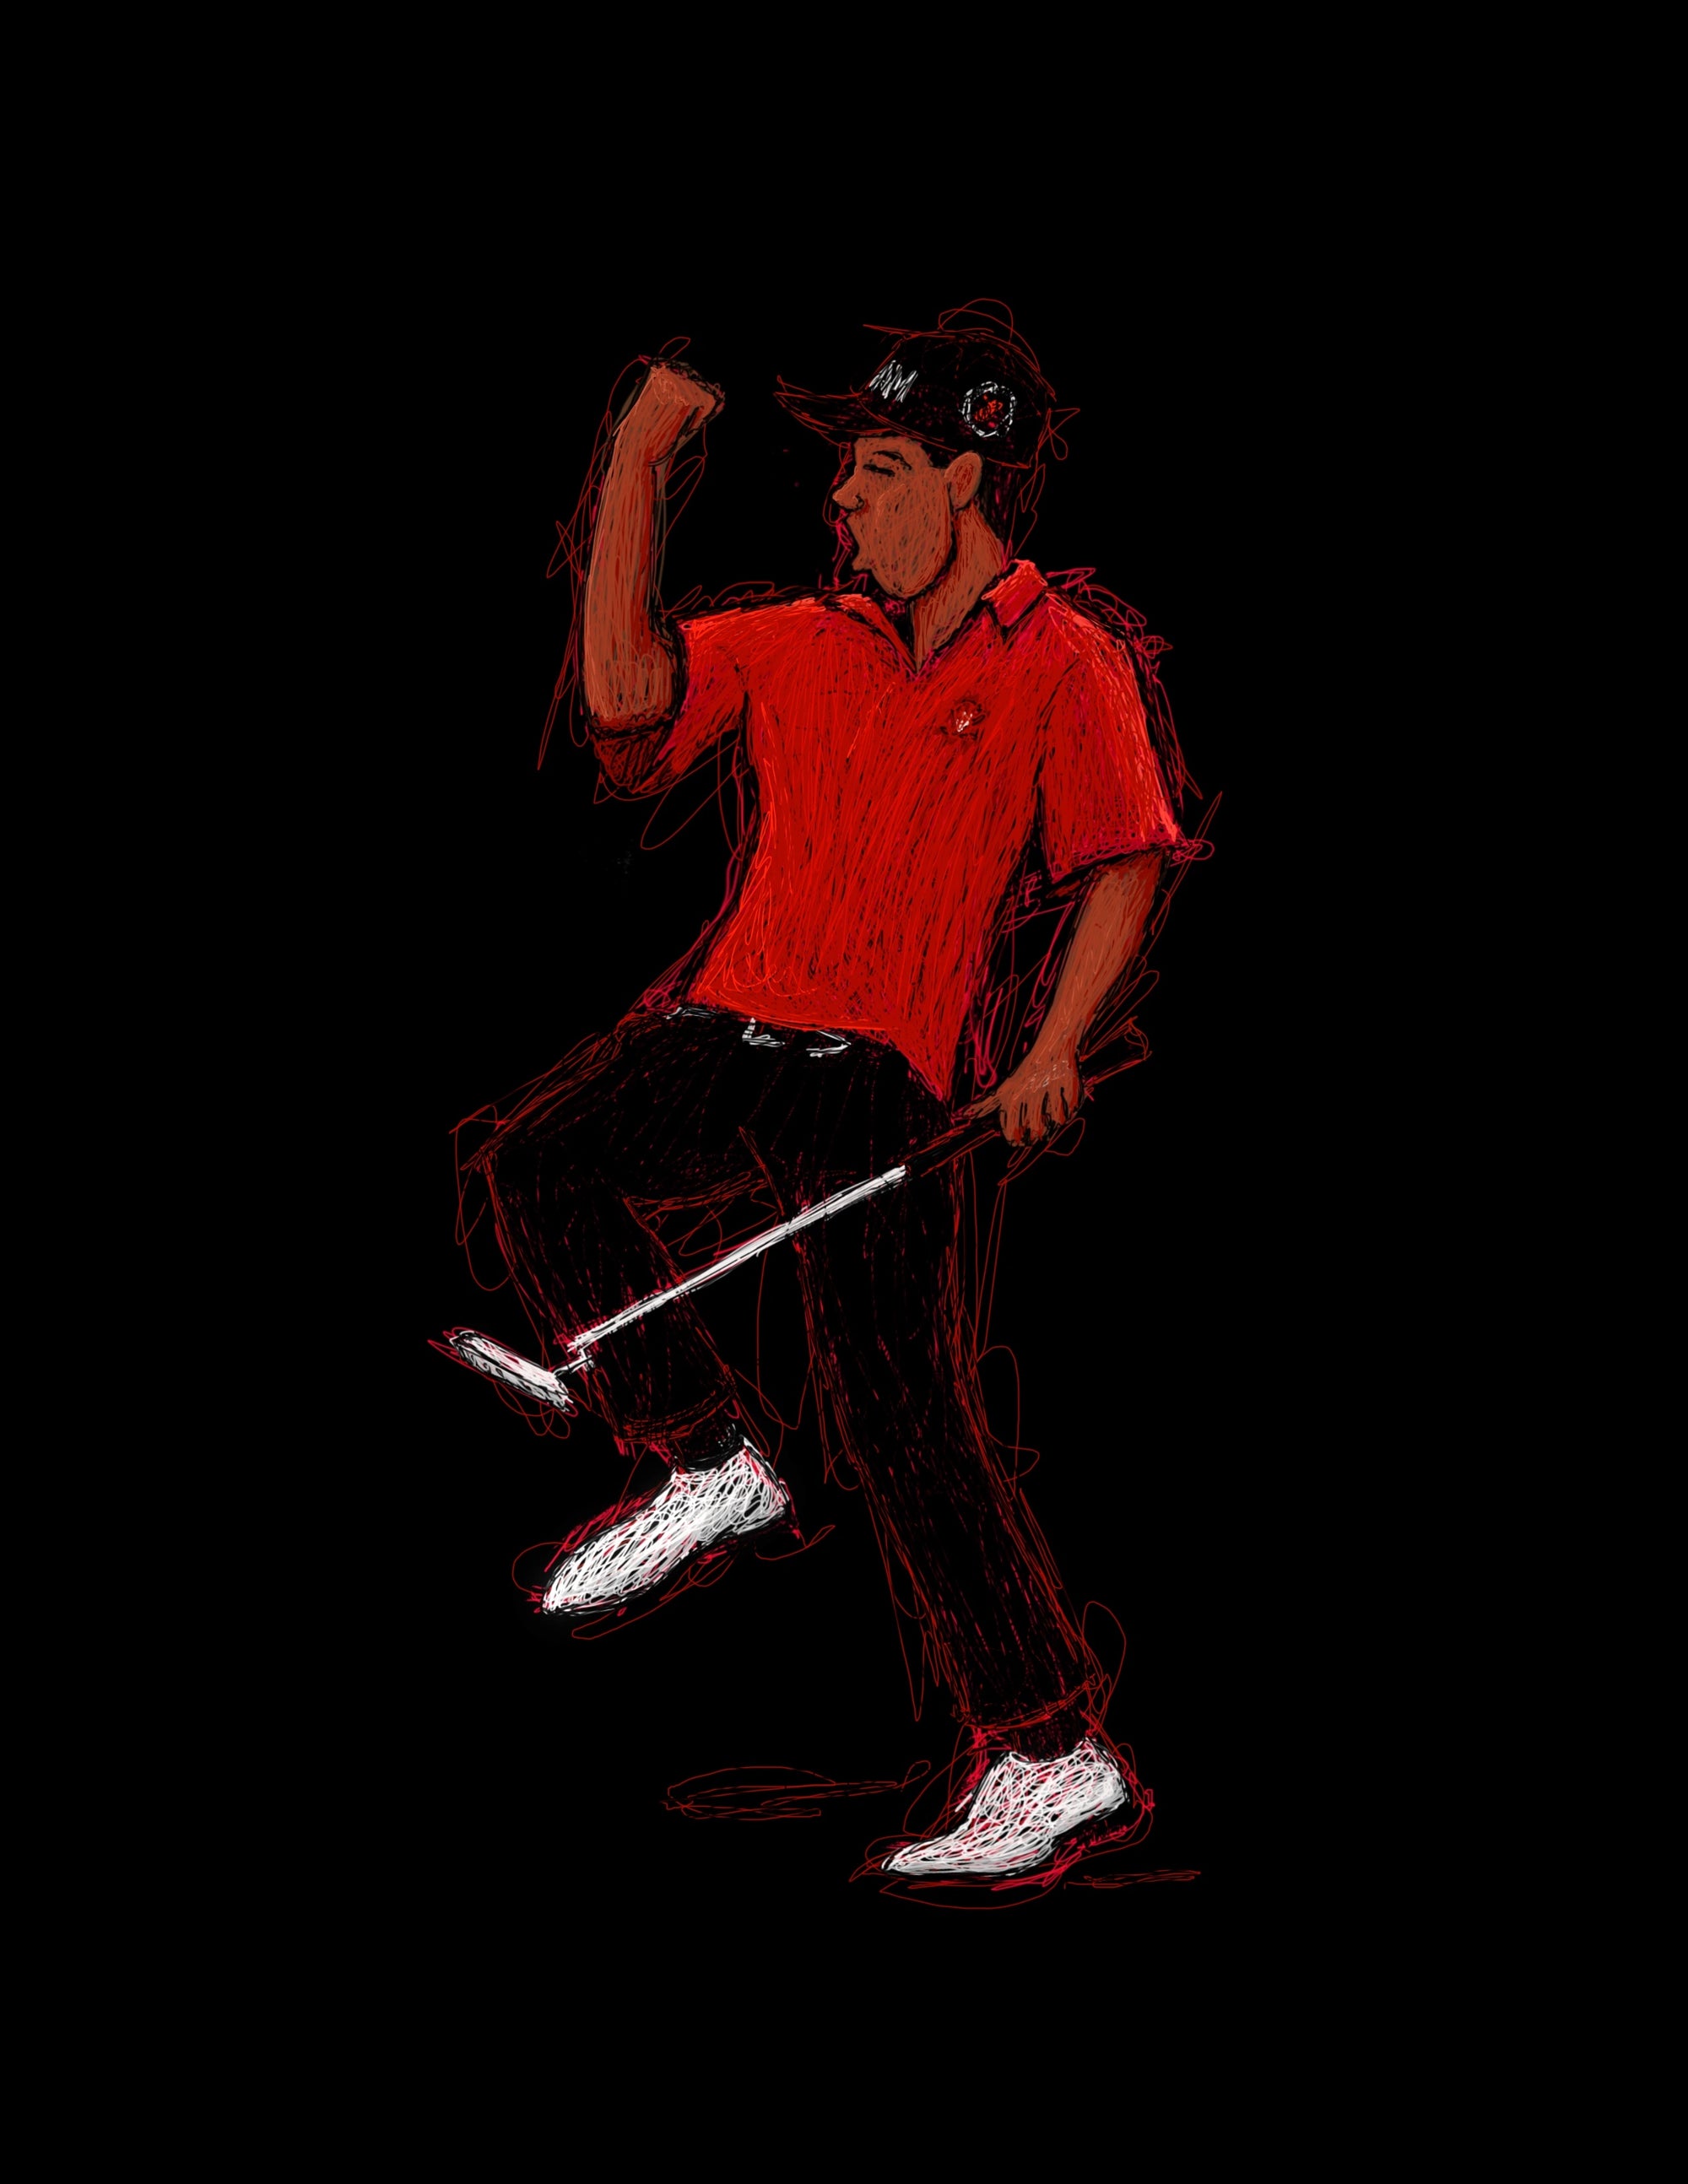 Tiger Woods fist pump